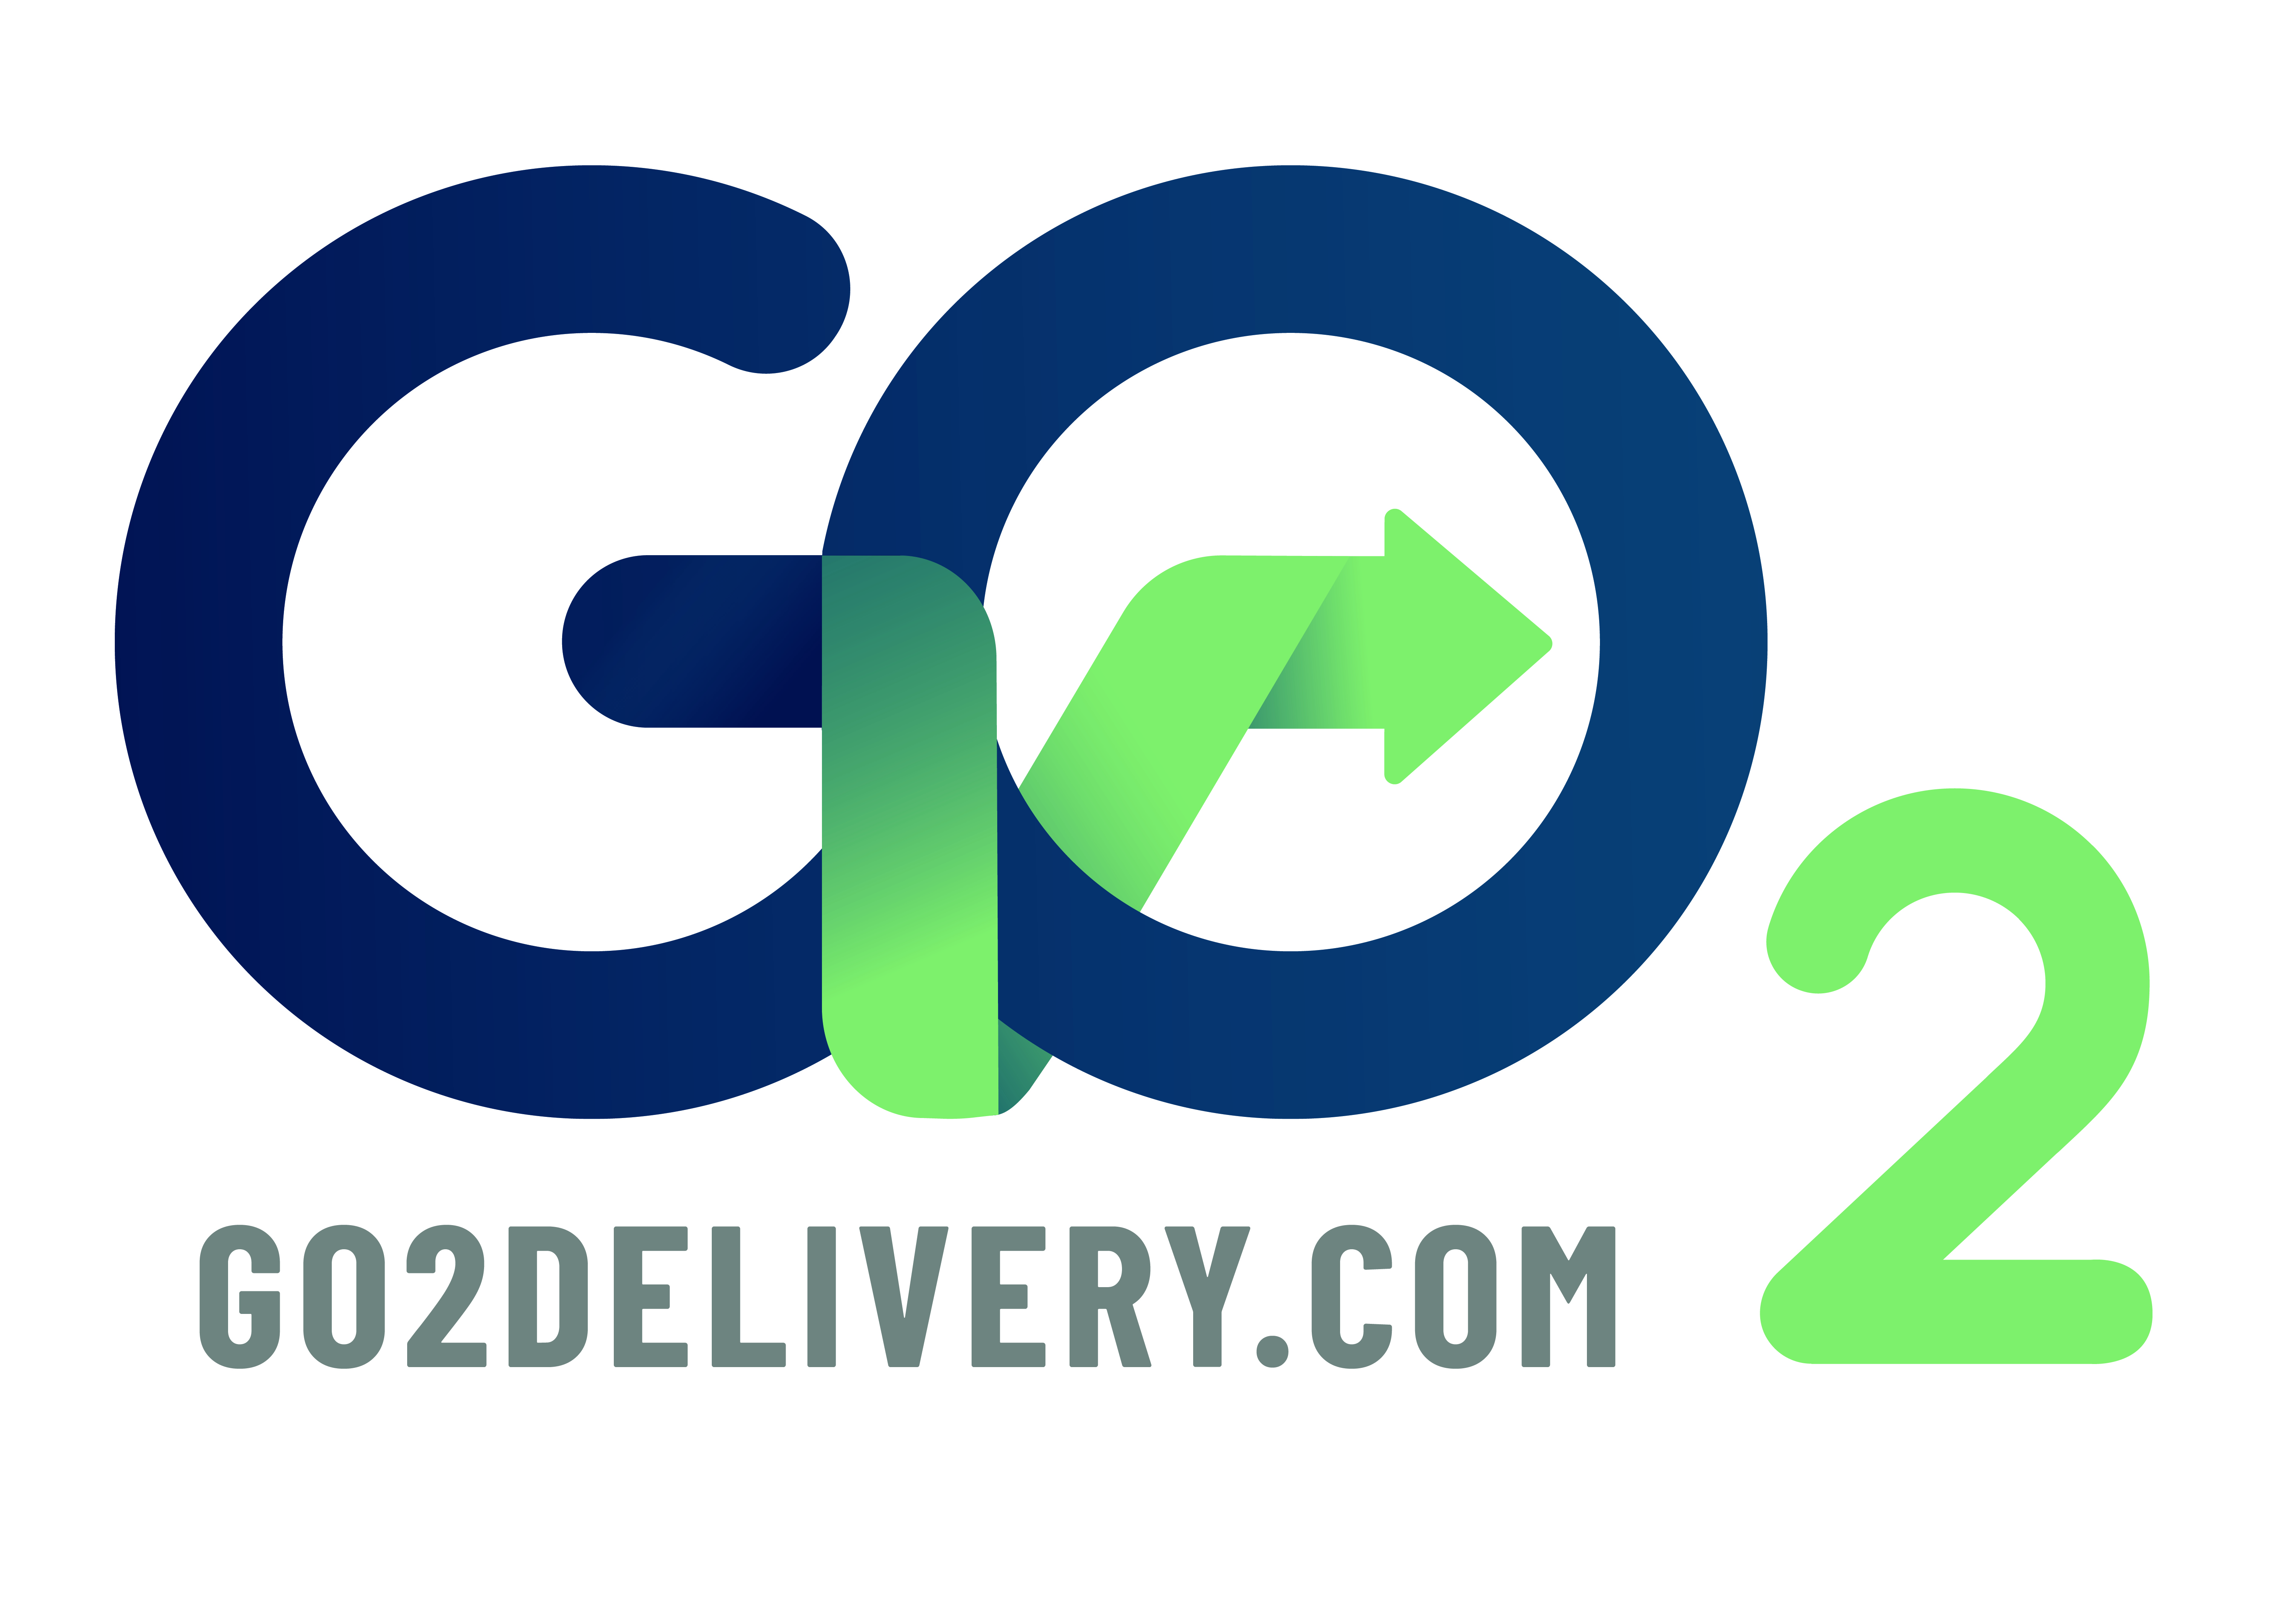 go2-logo-with-website.jpg